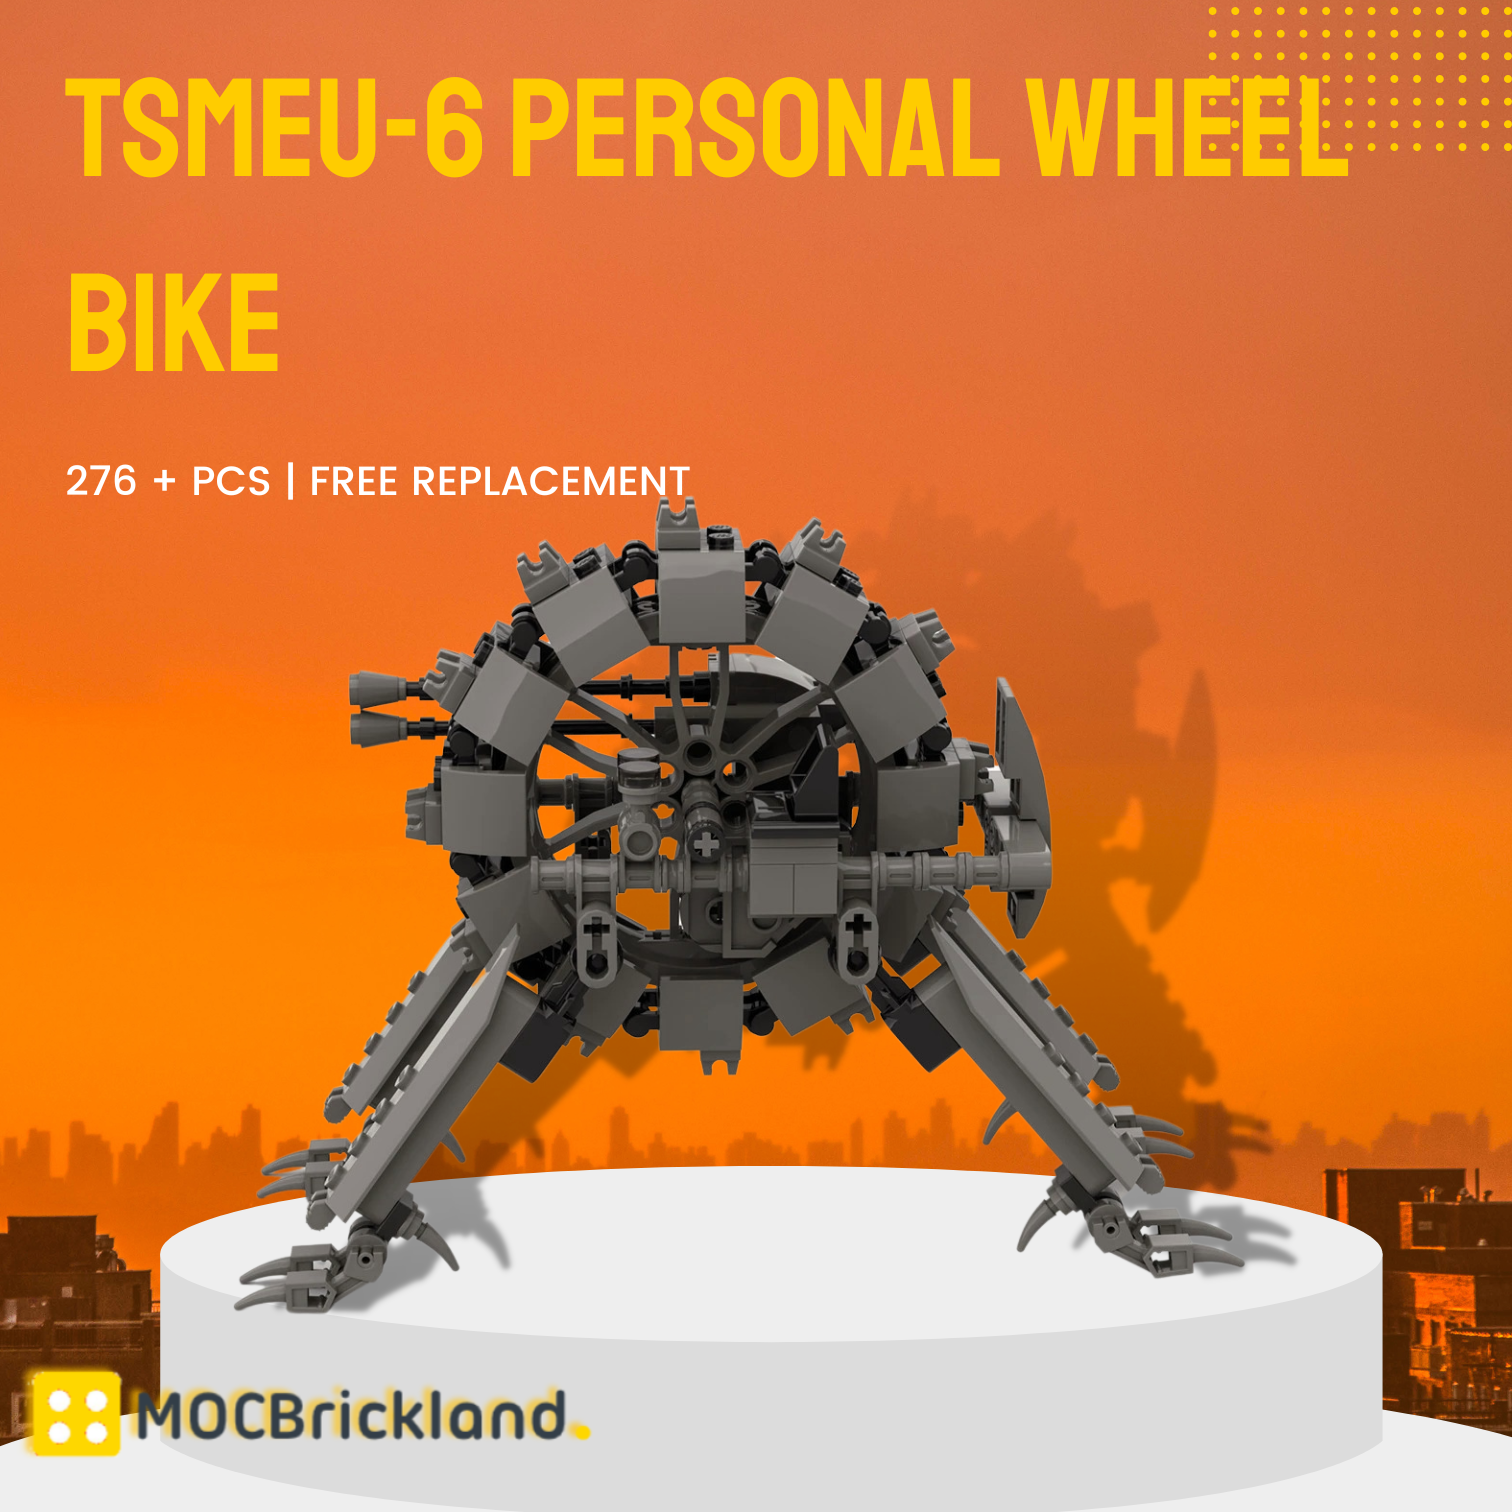 Star Wars MOC-103635 Tsmeu-6 Personal Wheel Bike MOCBRICKLAND